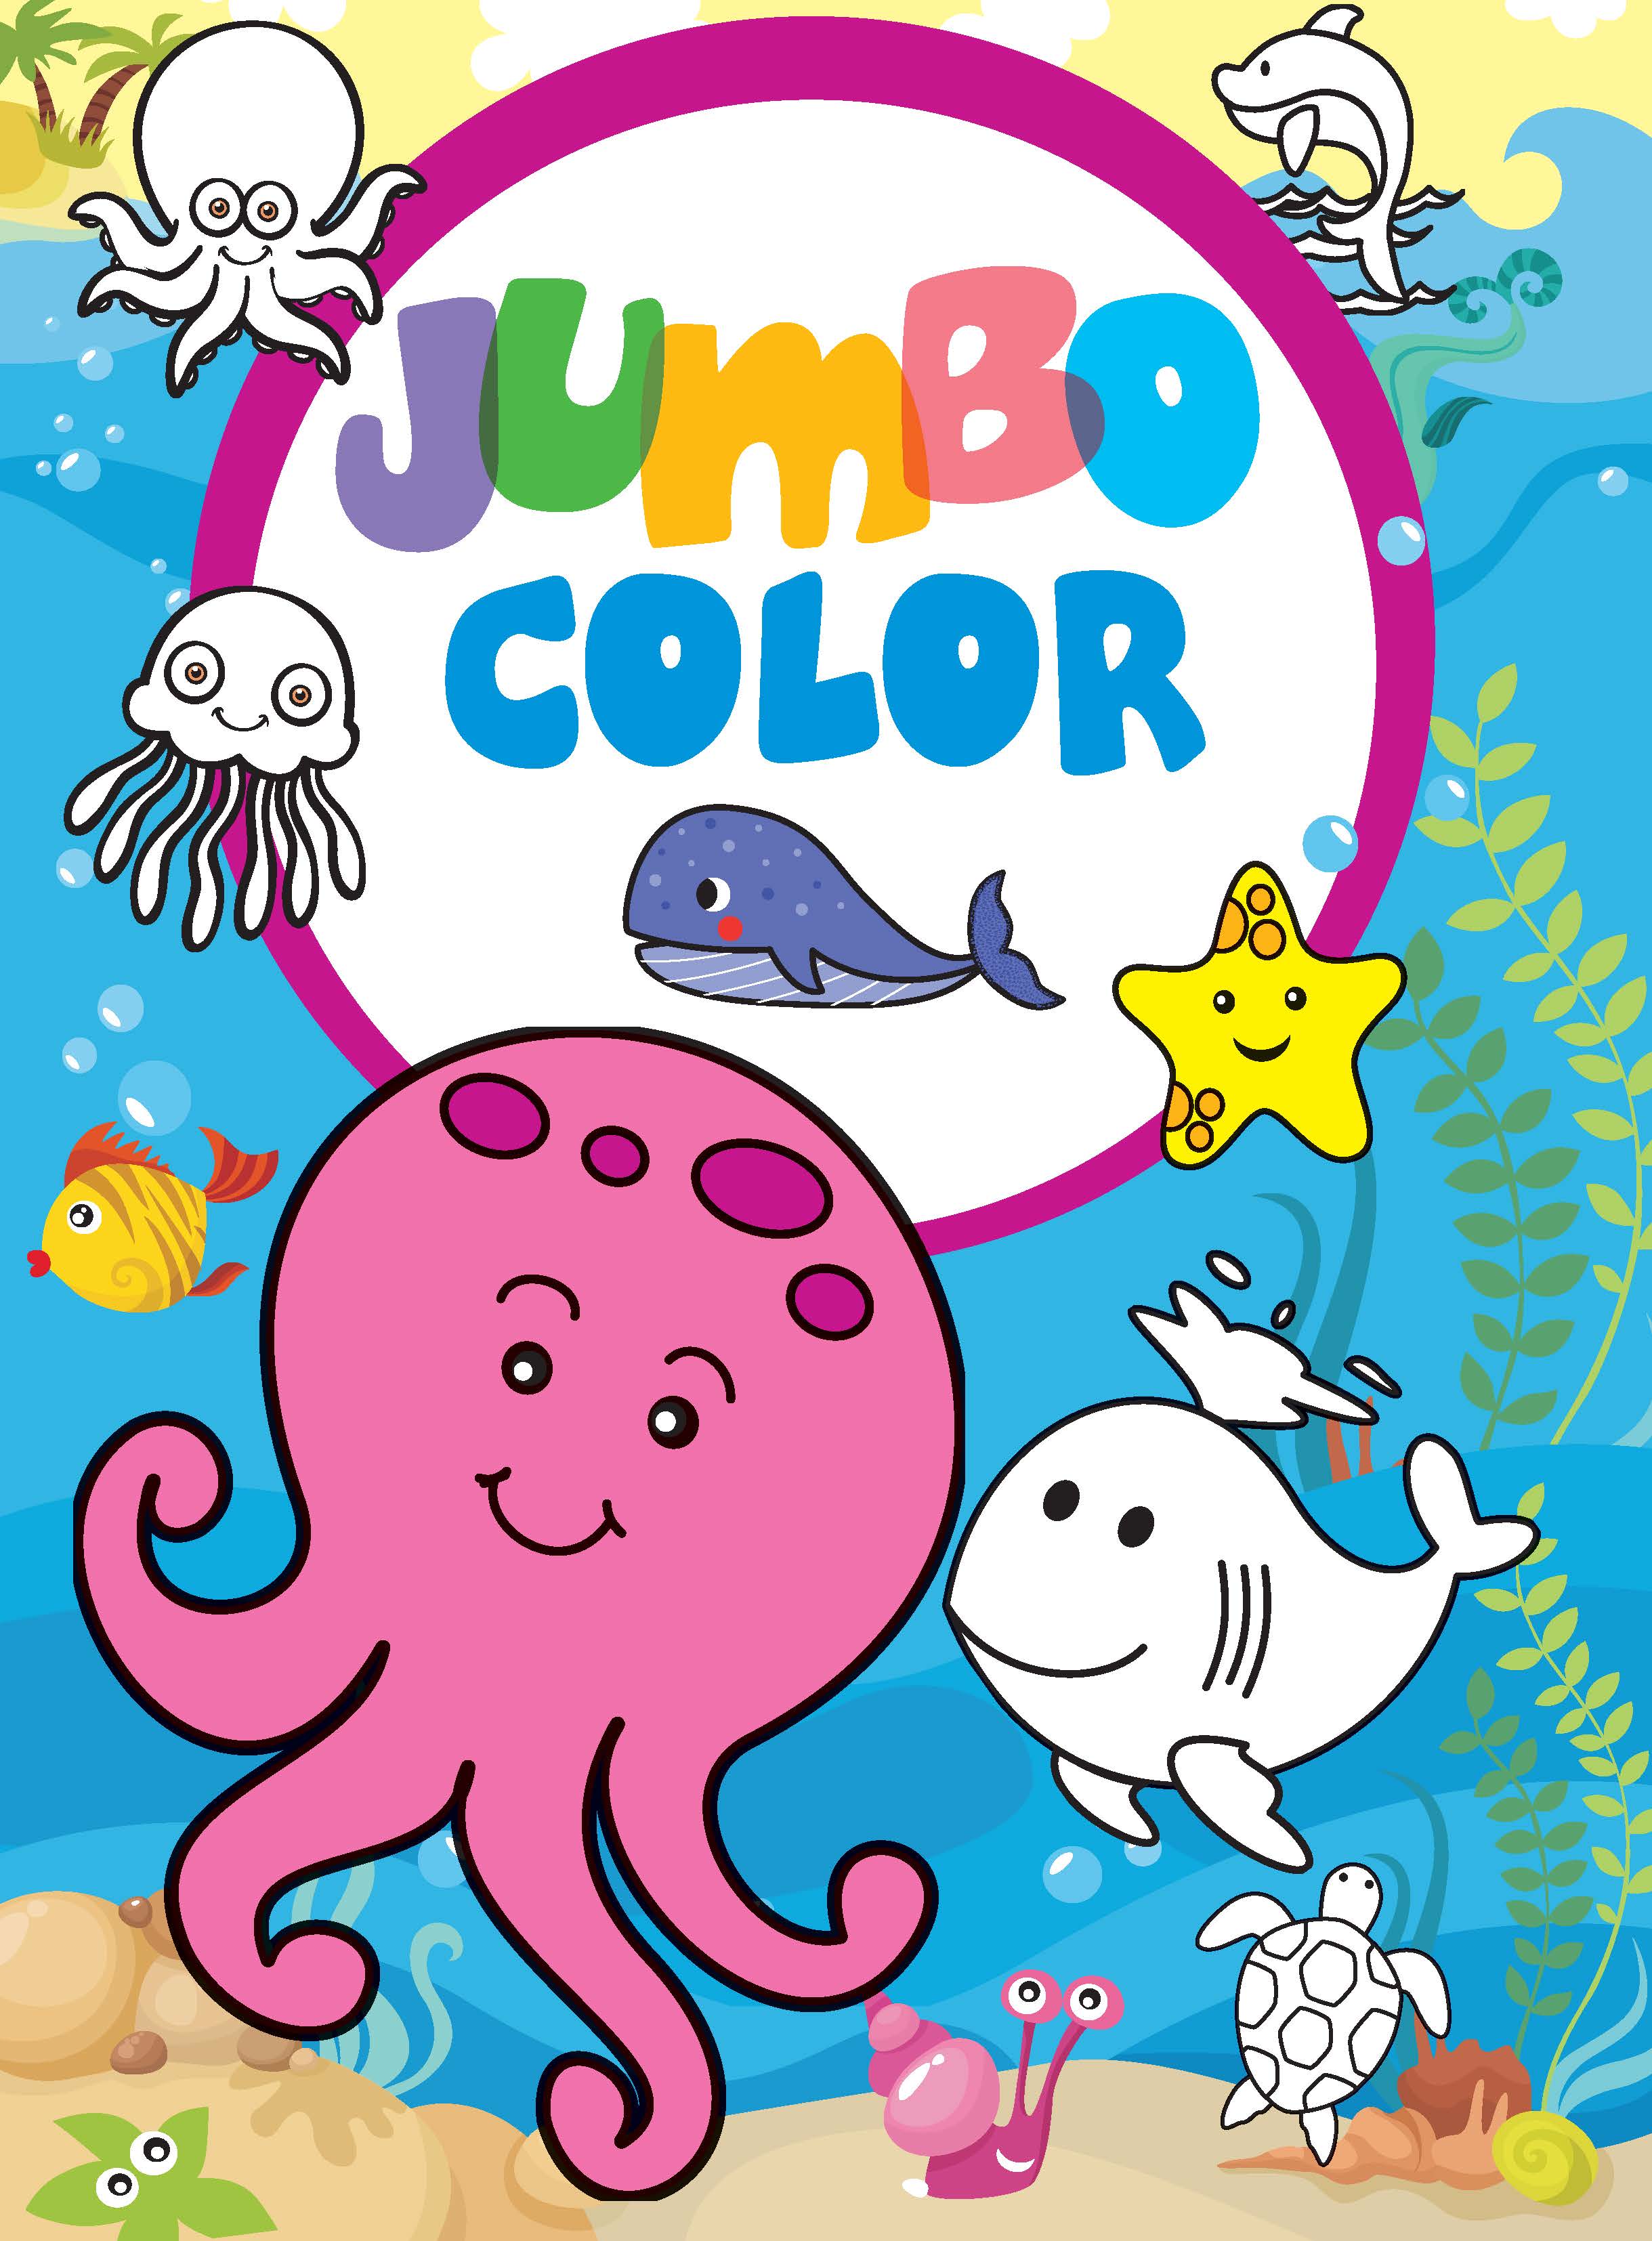 Jumbo Colouring Book-2